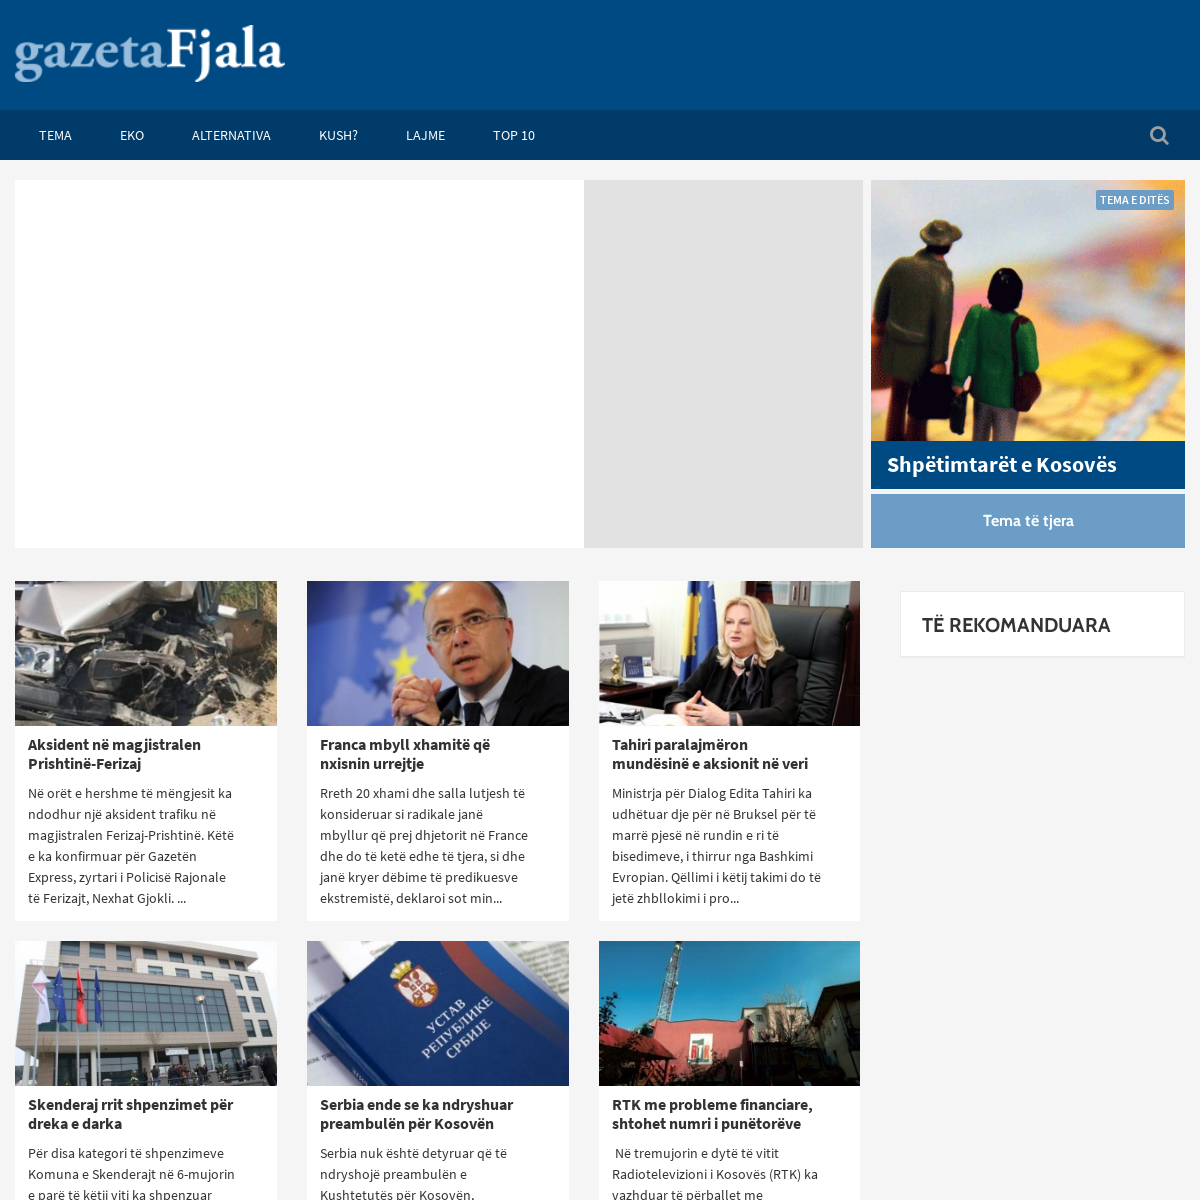 A complete backup of gazetafjala.com